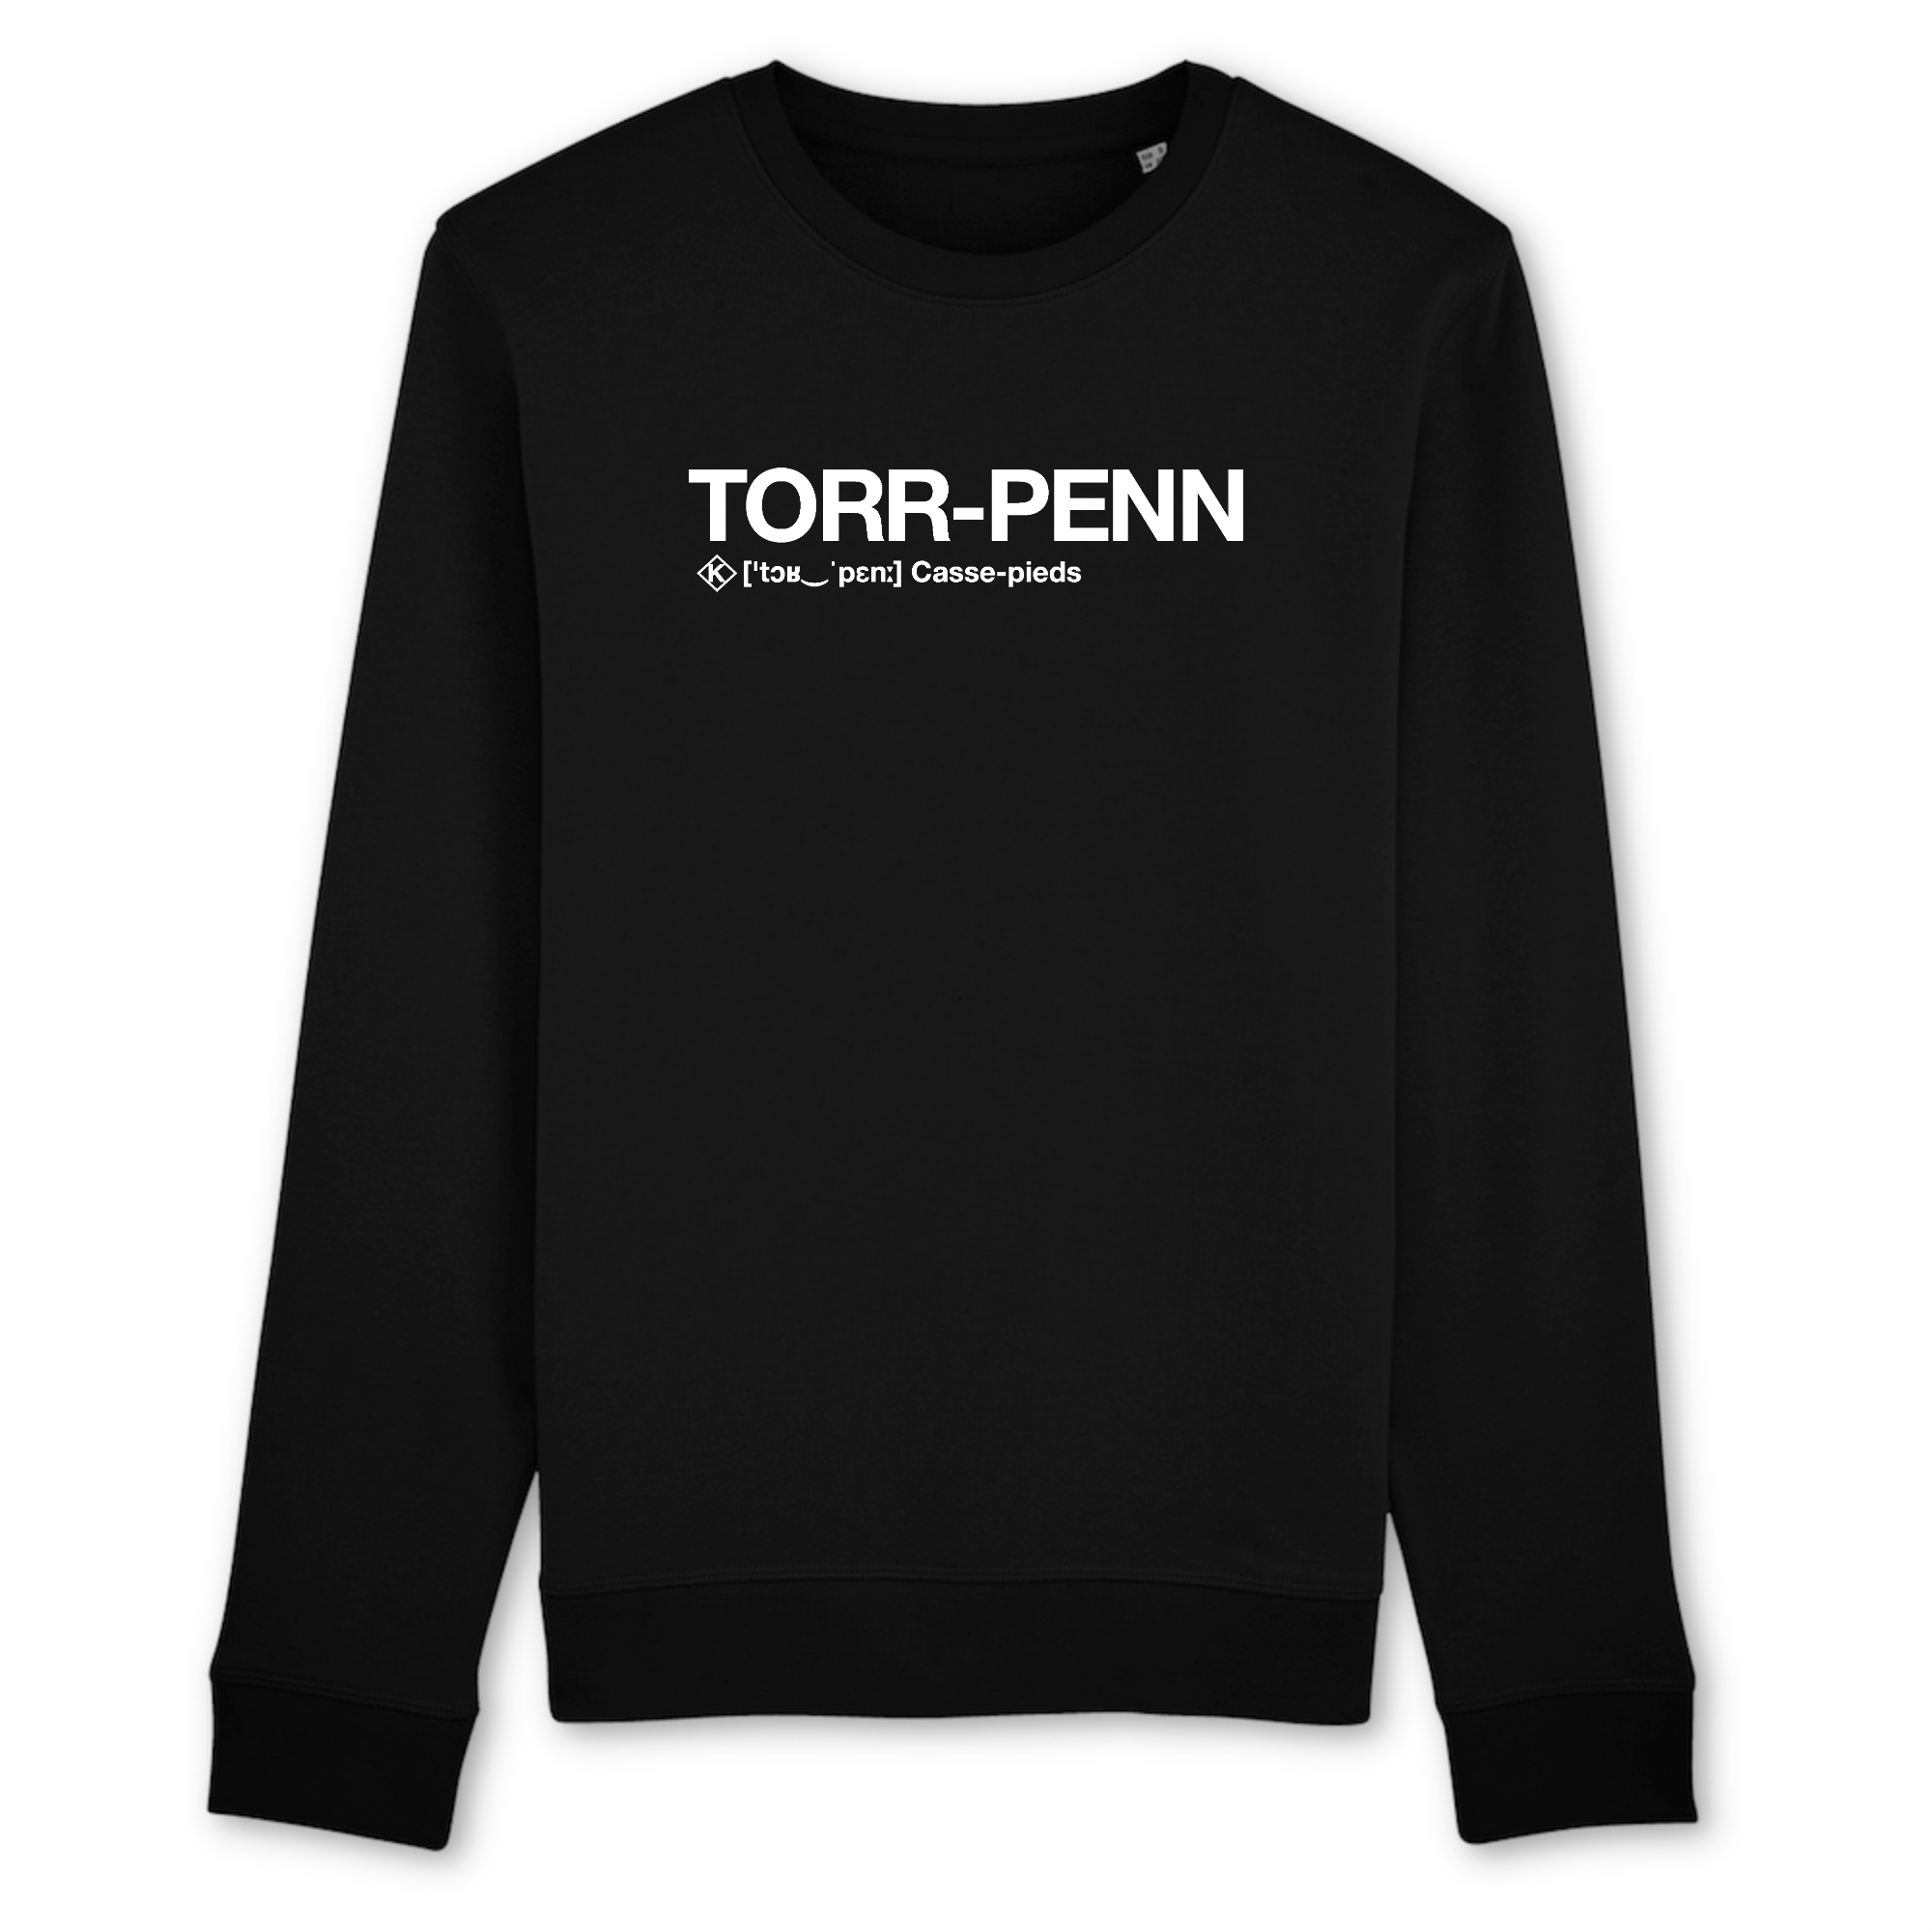 Torr-Penn Sweatshirt (Casse-pieds)